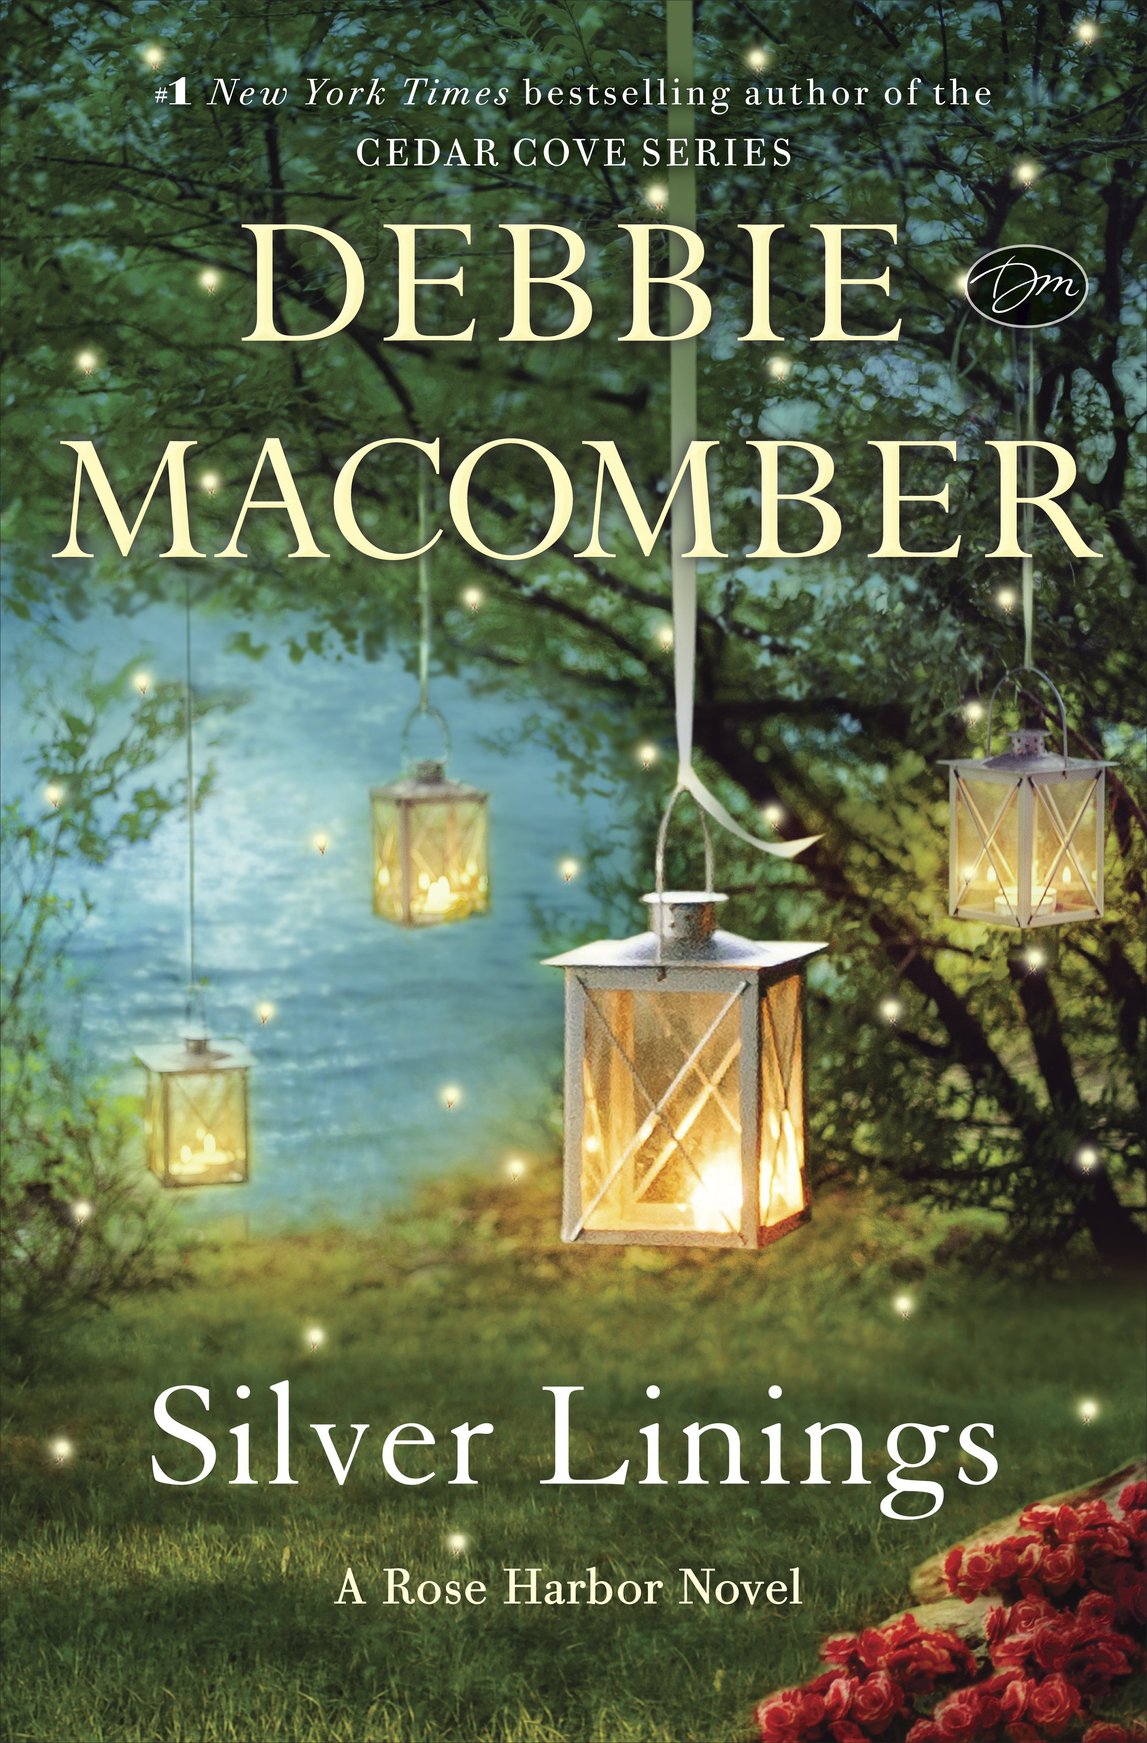 Silver Linings (2015) by Debbie Macomber